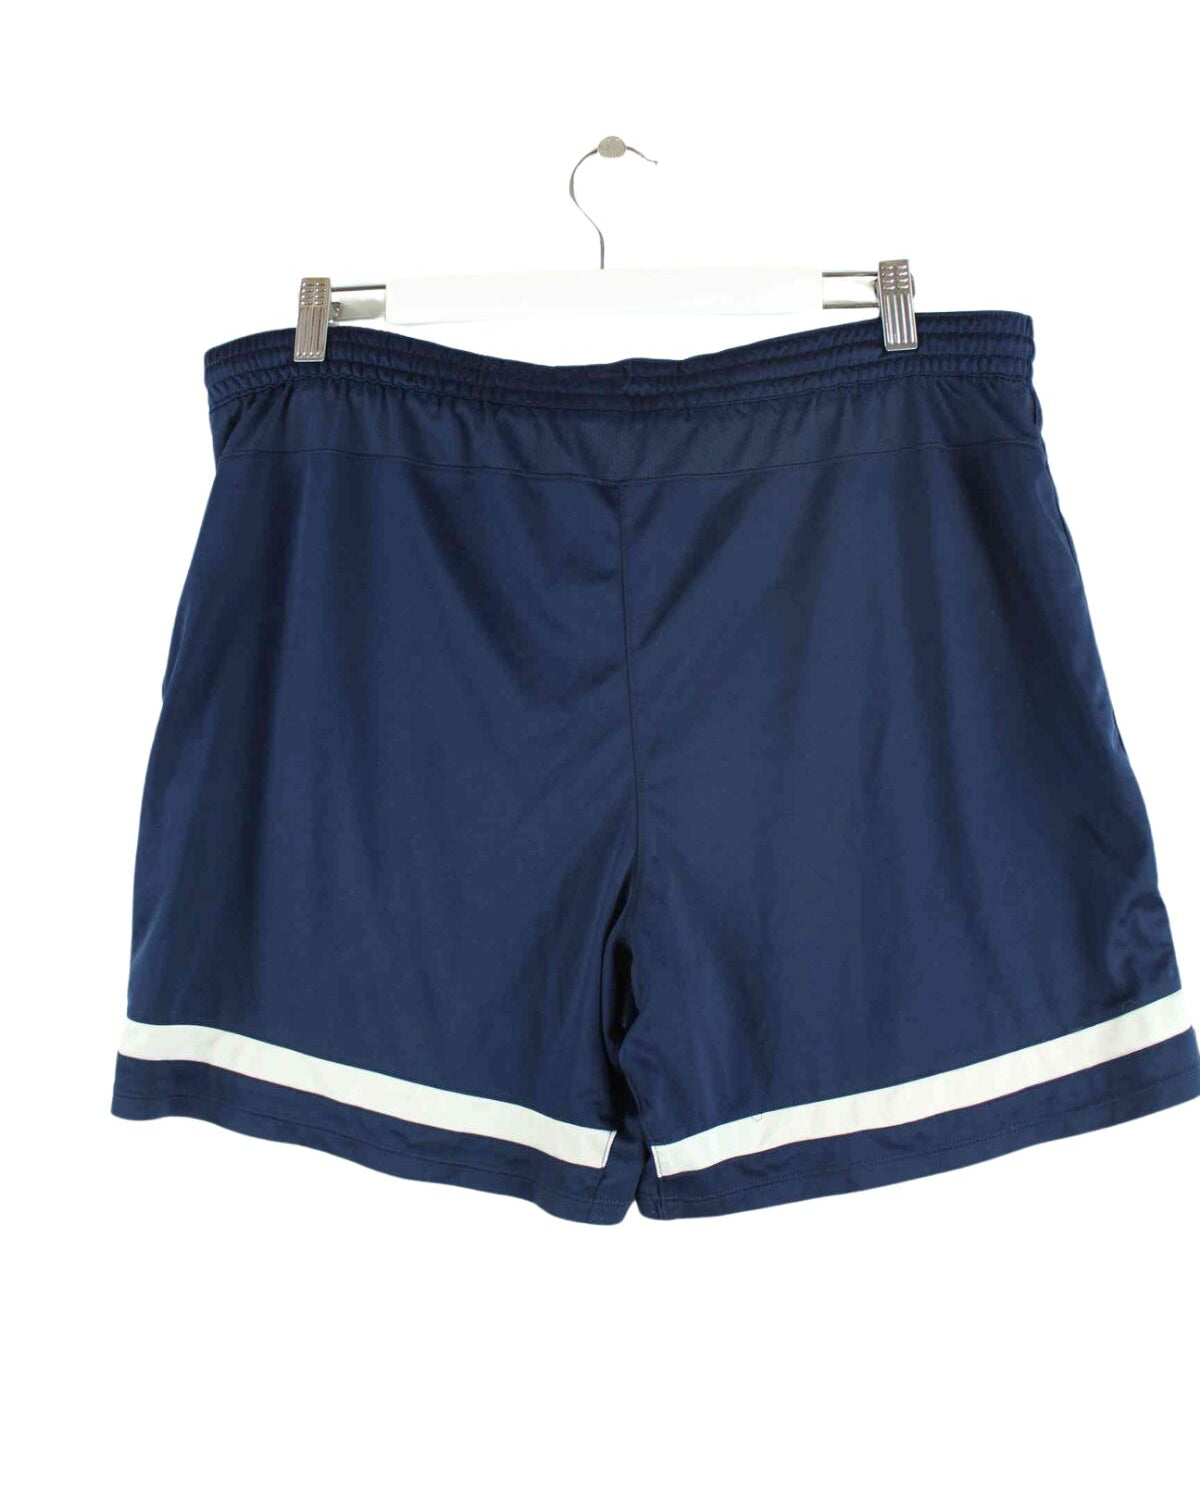 Nike Dri-Fit Shorts Blau M (back image)